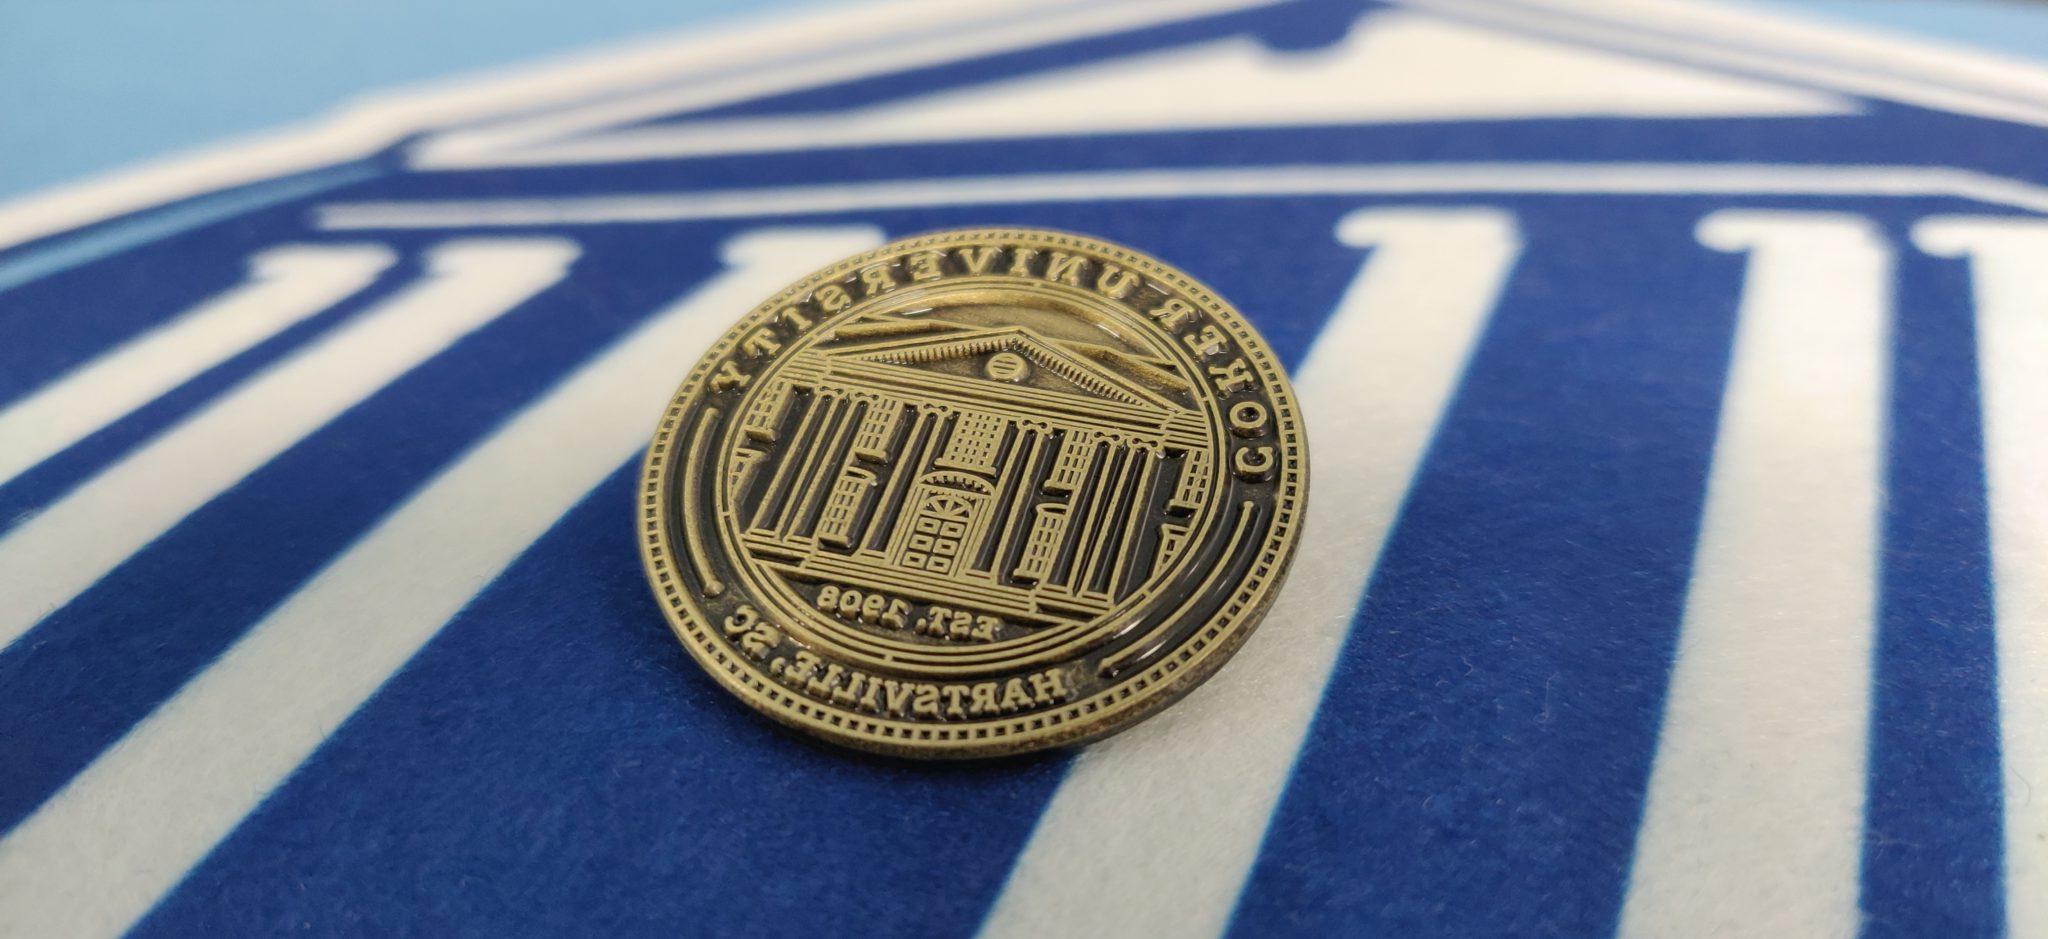 Coker University Seal on a lapel pin